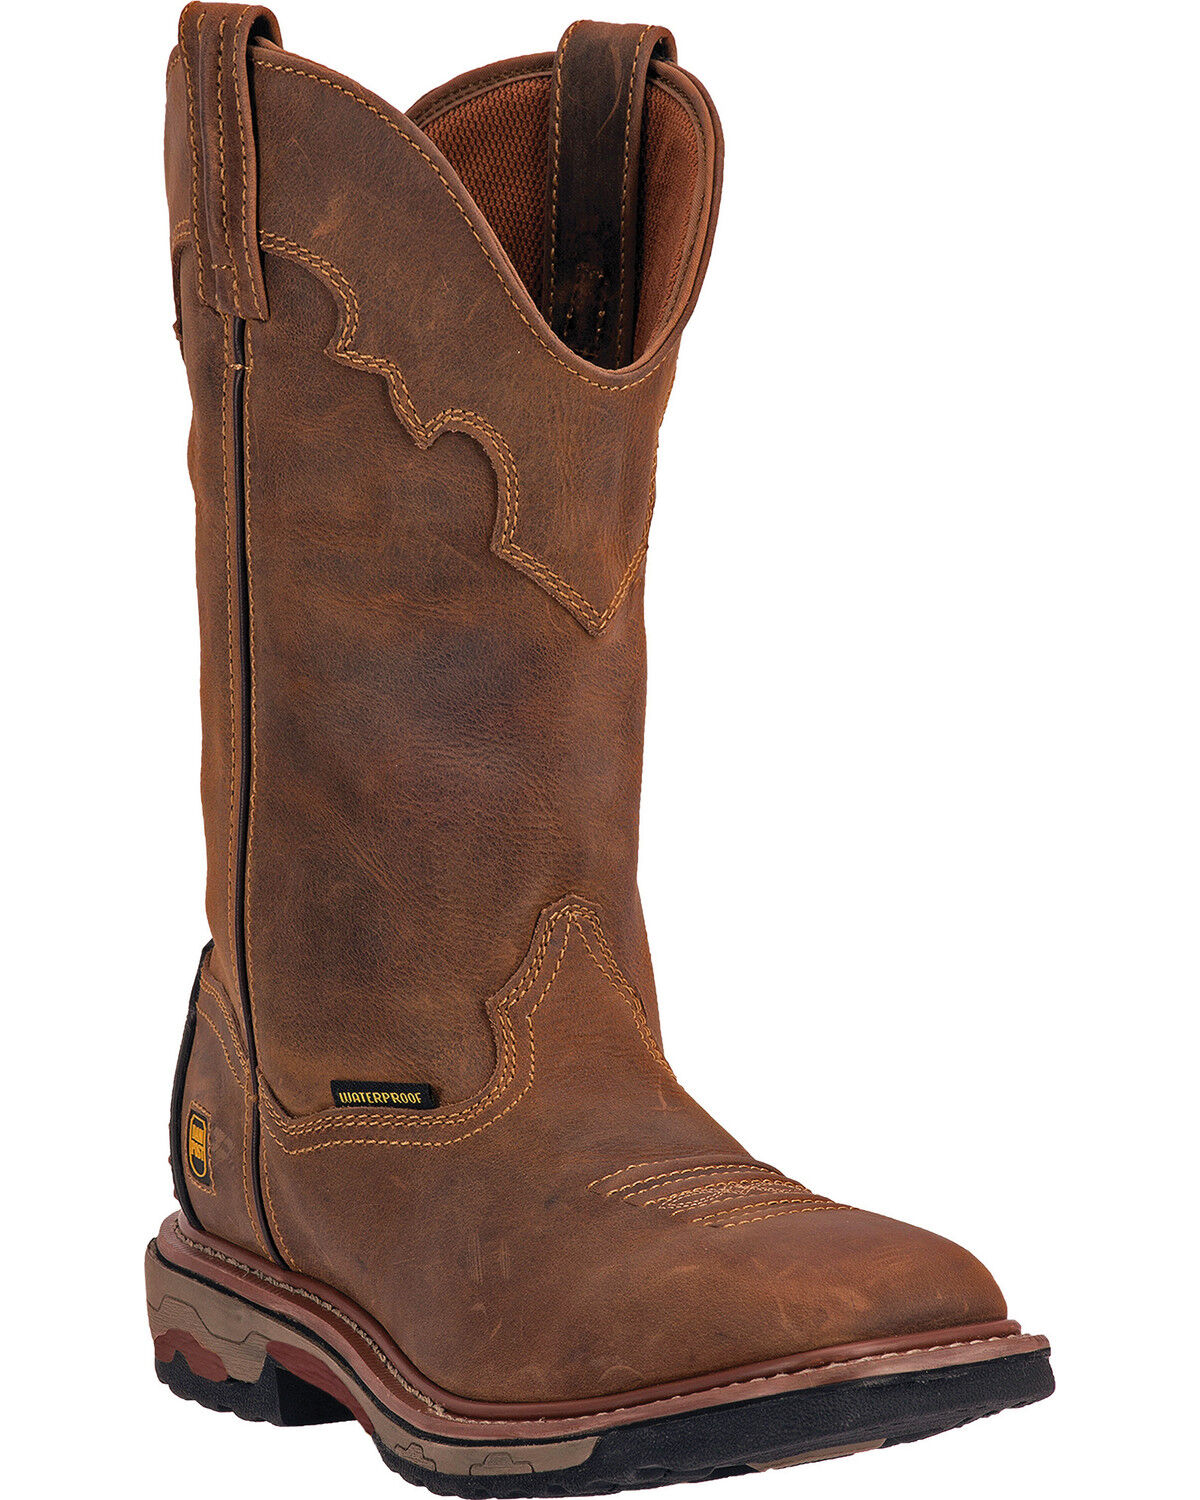 waterproof boots size 16